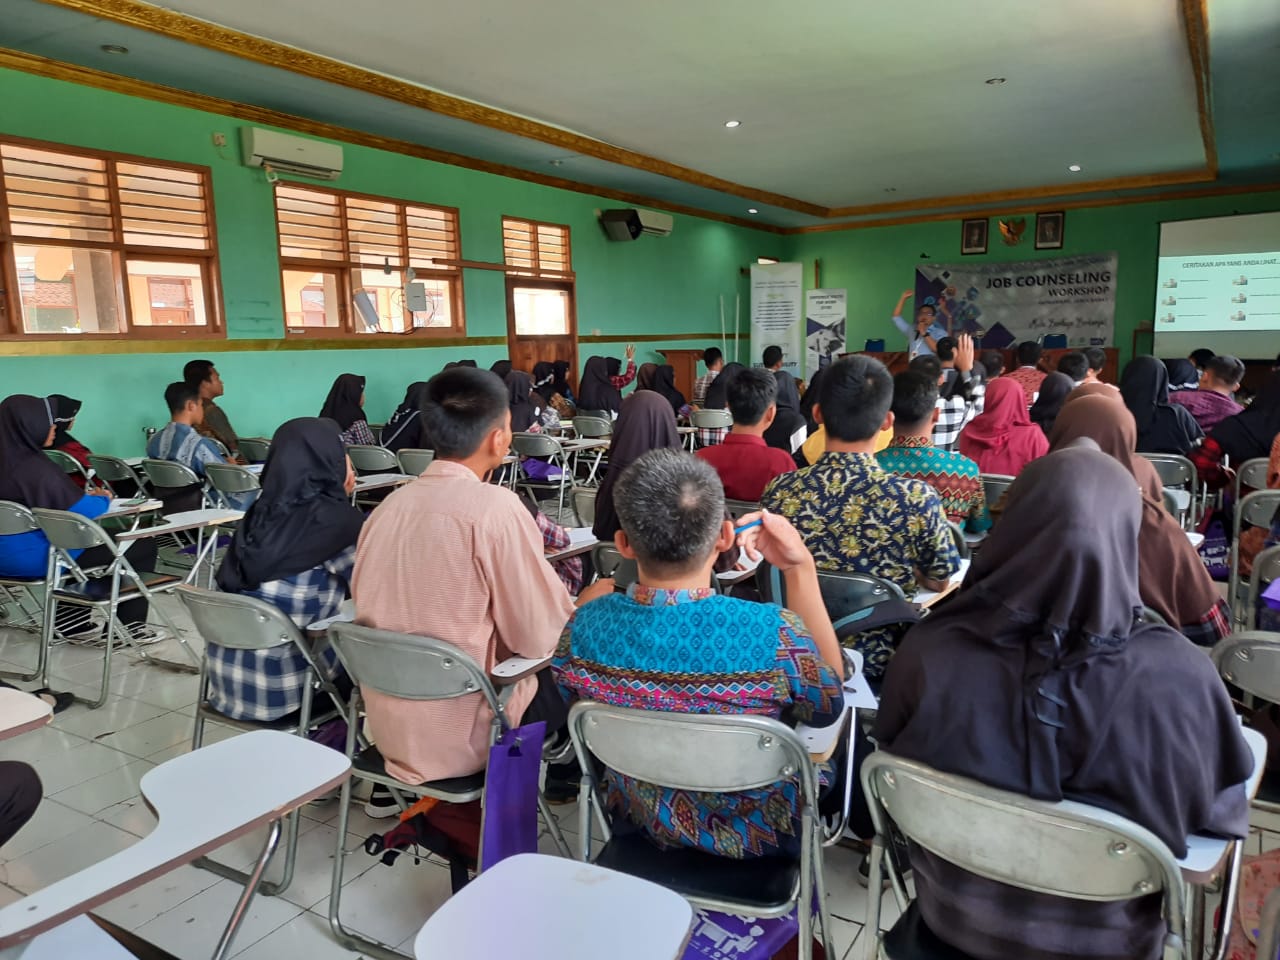 Biro Psikologi di Kalimantan Selatan - PT Solutiva Consulting Indonesia